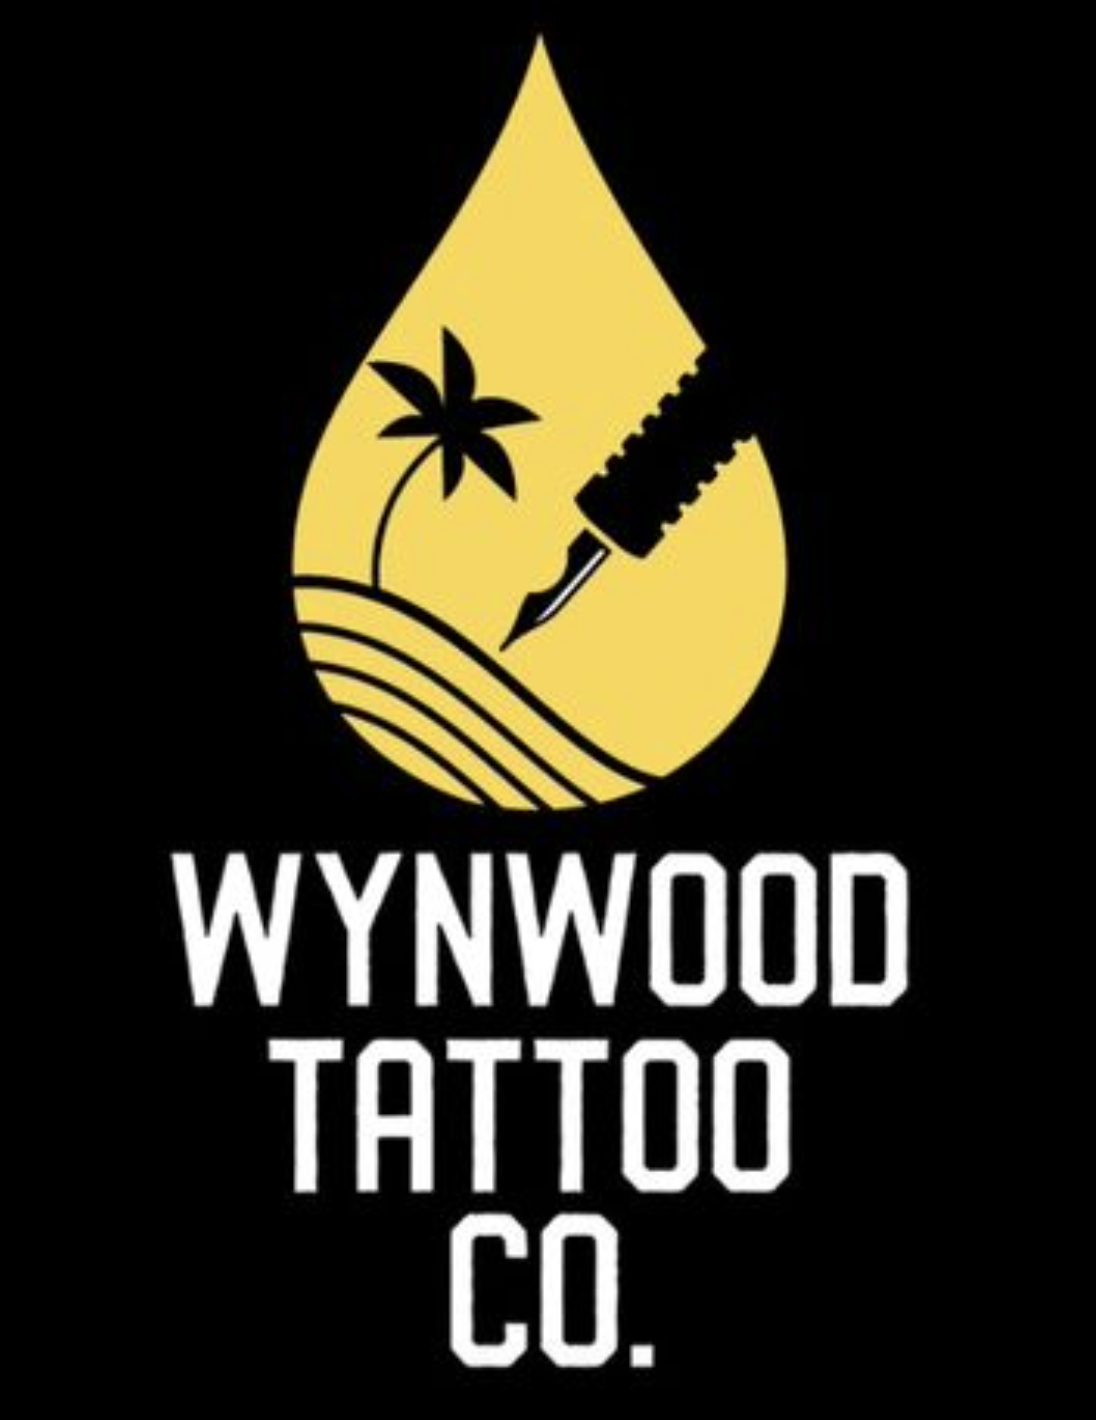 Wynwood Tattoo co.